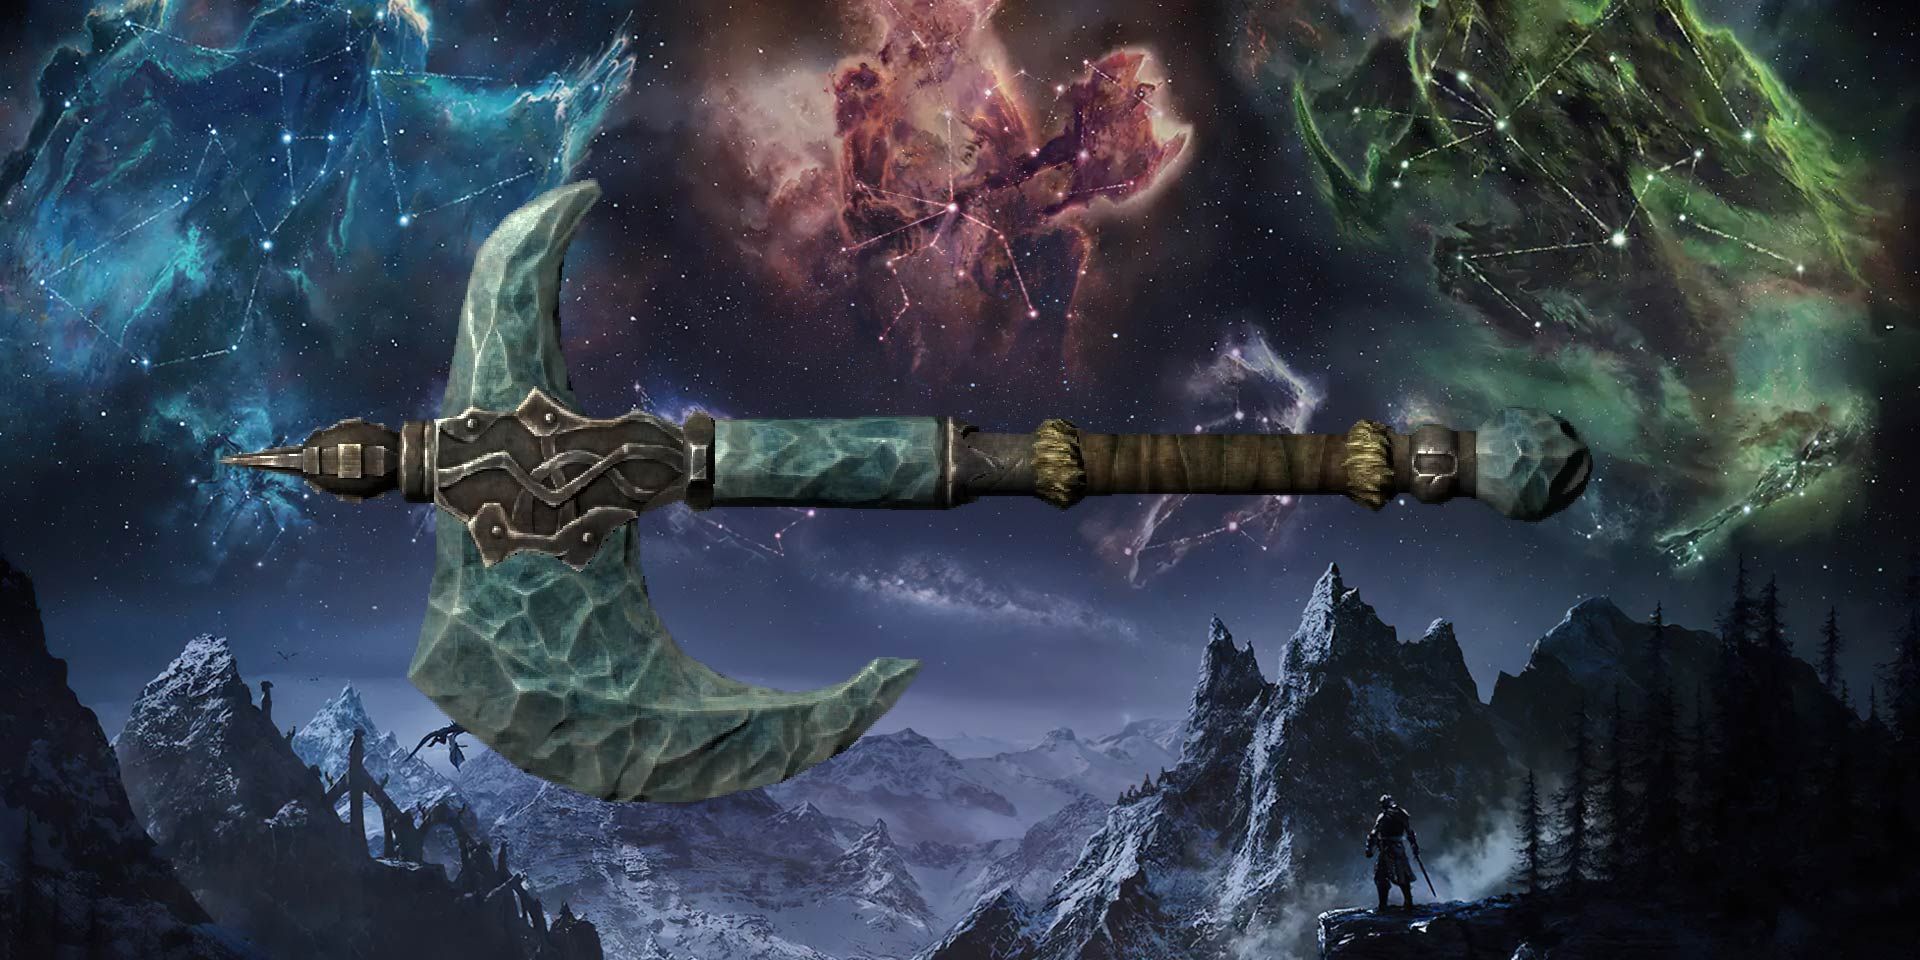 A Stalhrim War Axe  among mountains and Elder Scrolls star signs.